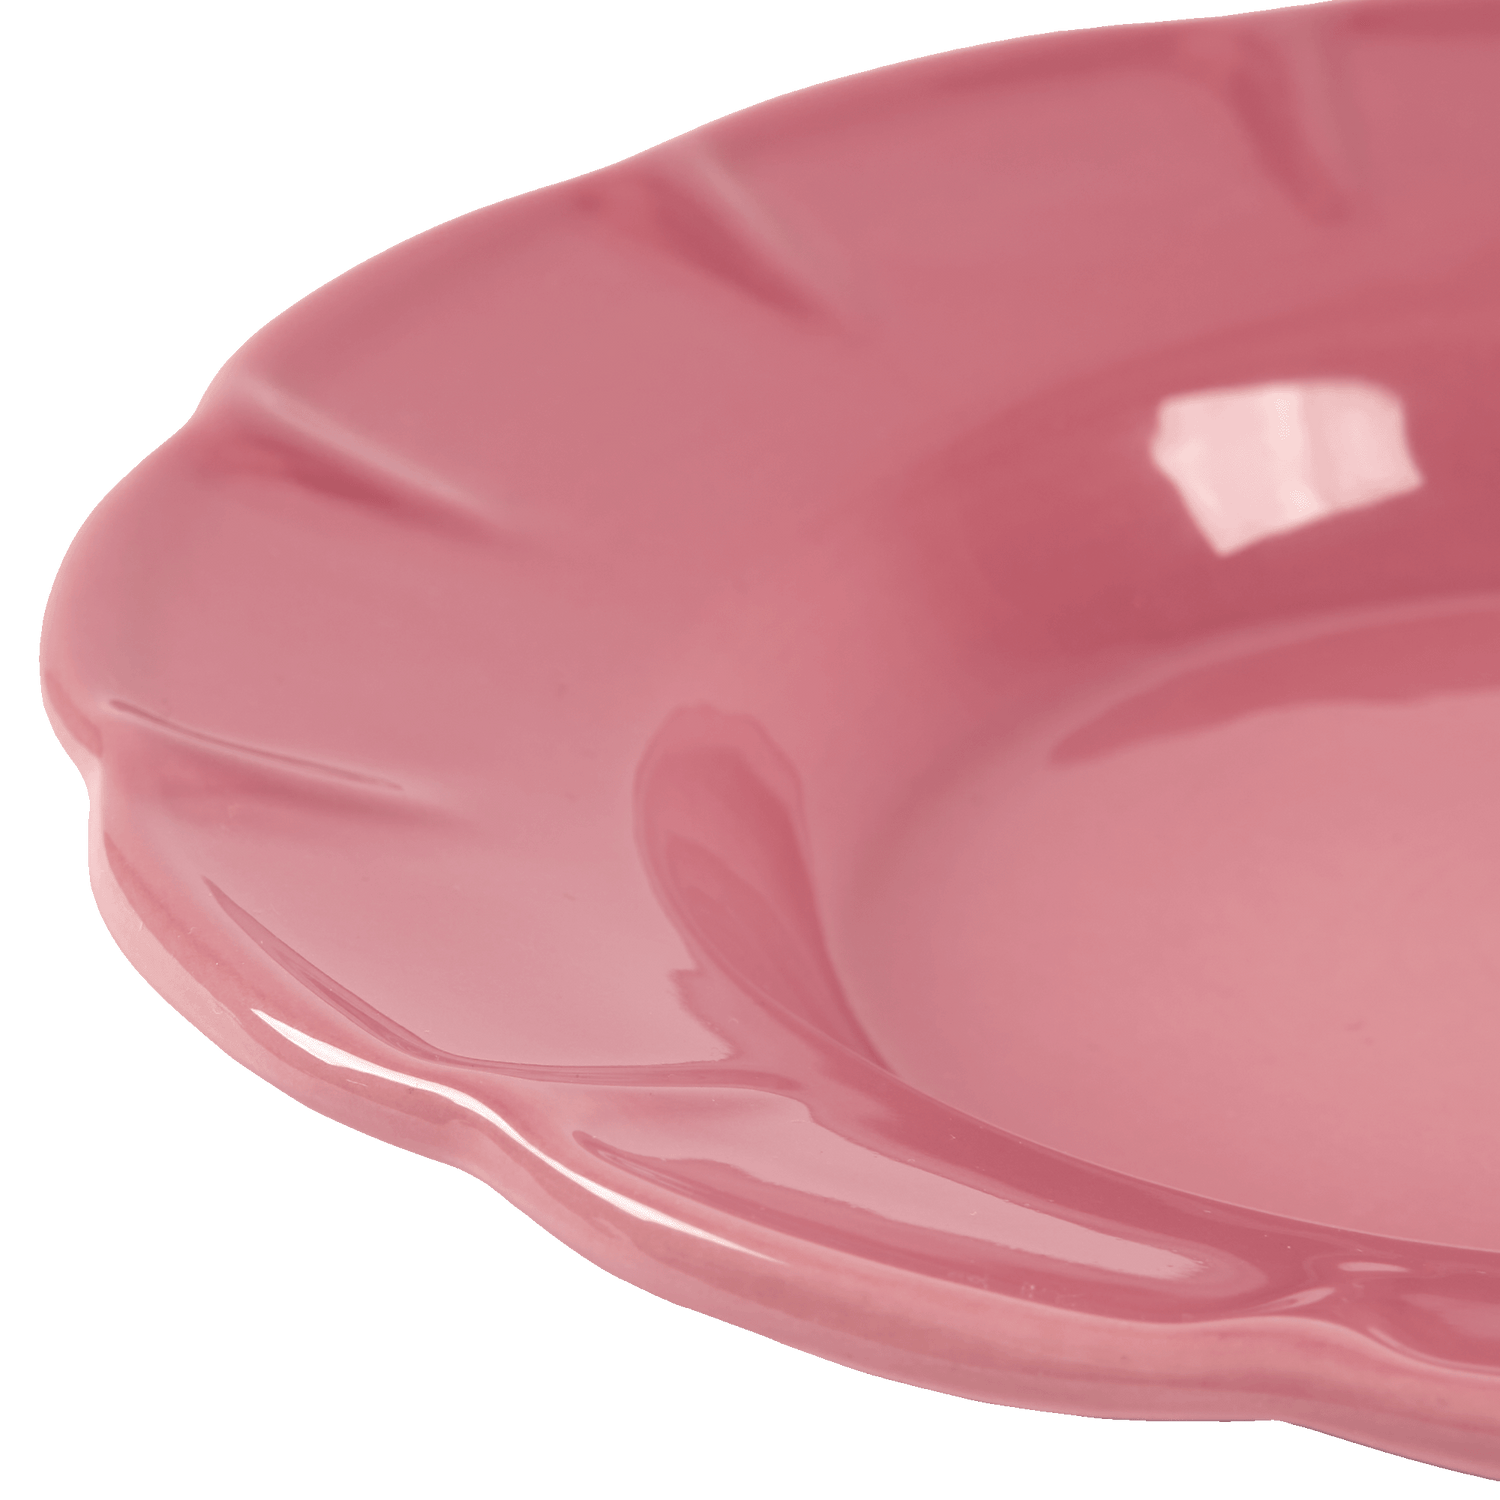 Everyday charm deep plate - Dark pink 25 cm